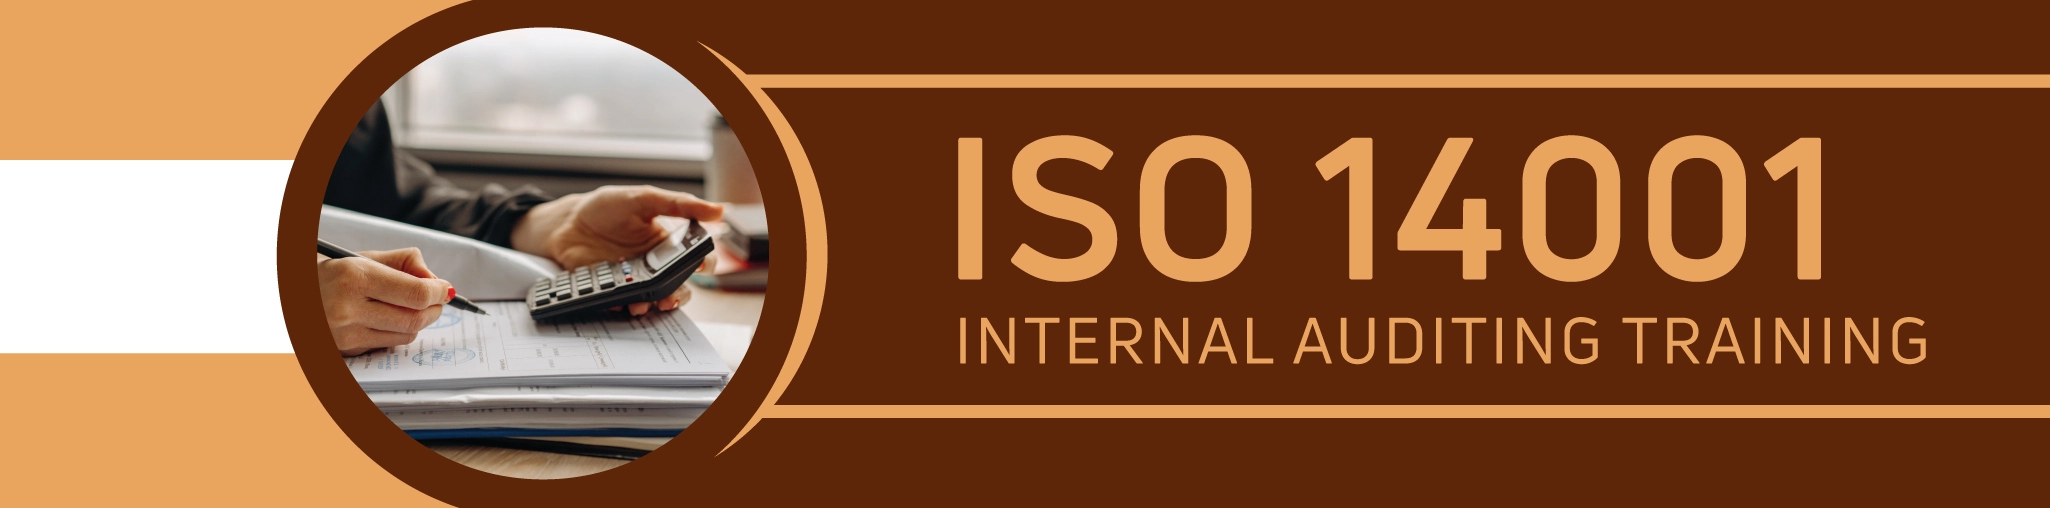 ISO 14001 Internal Auditing Training